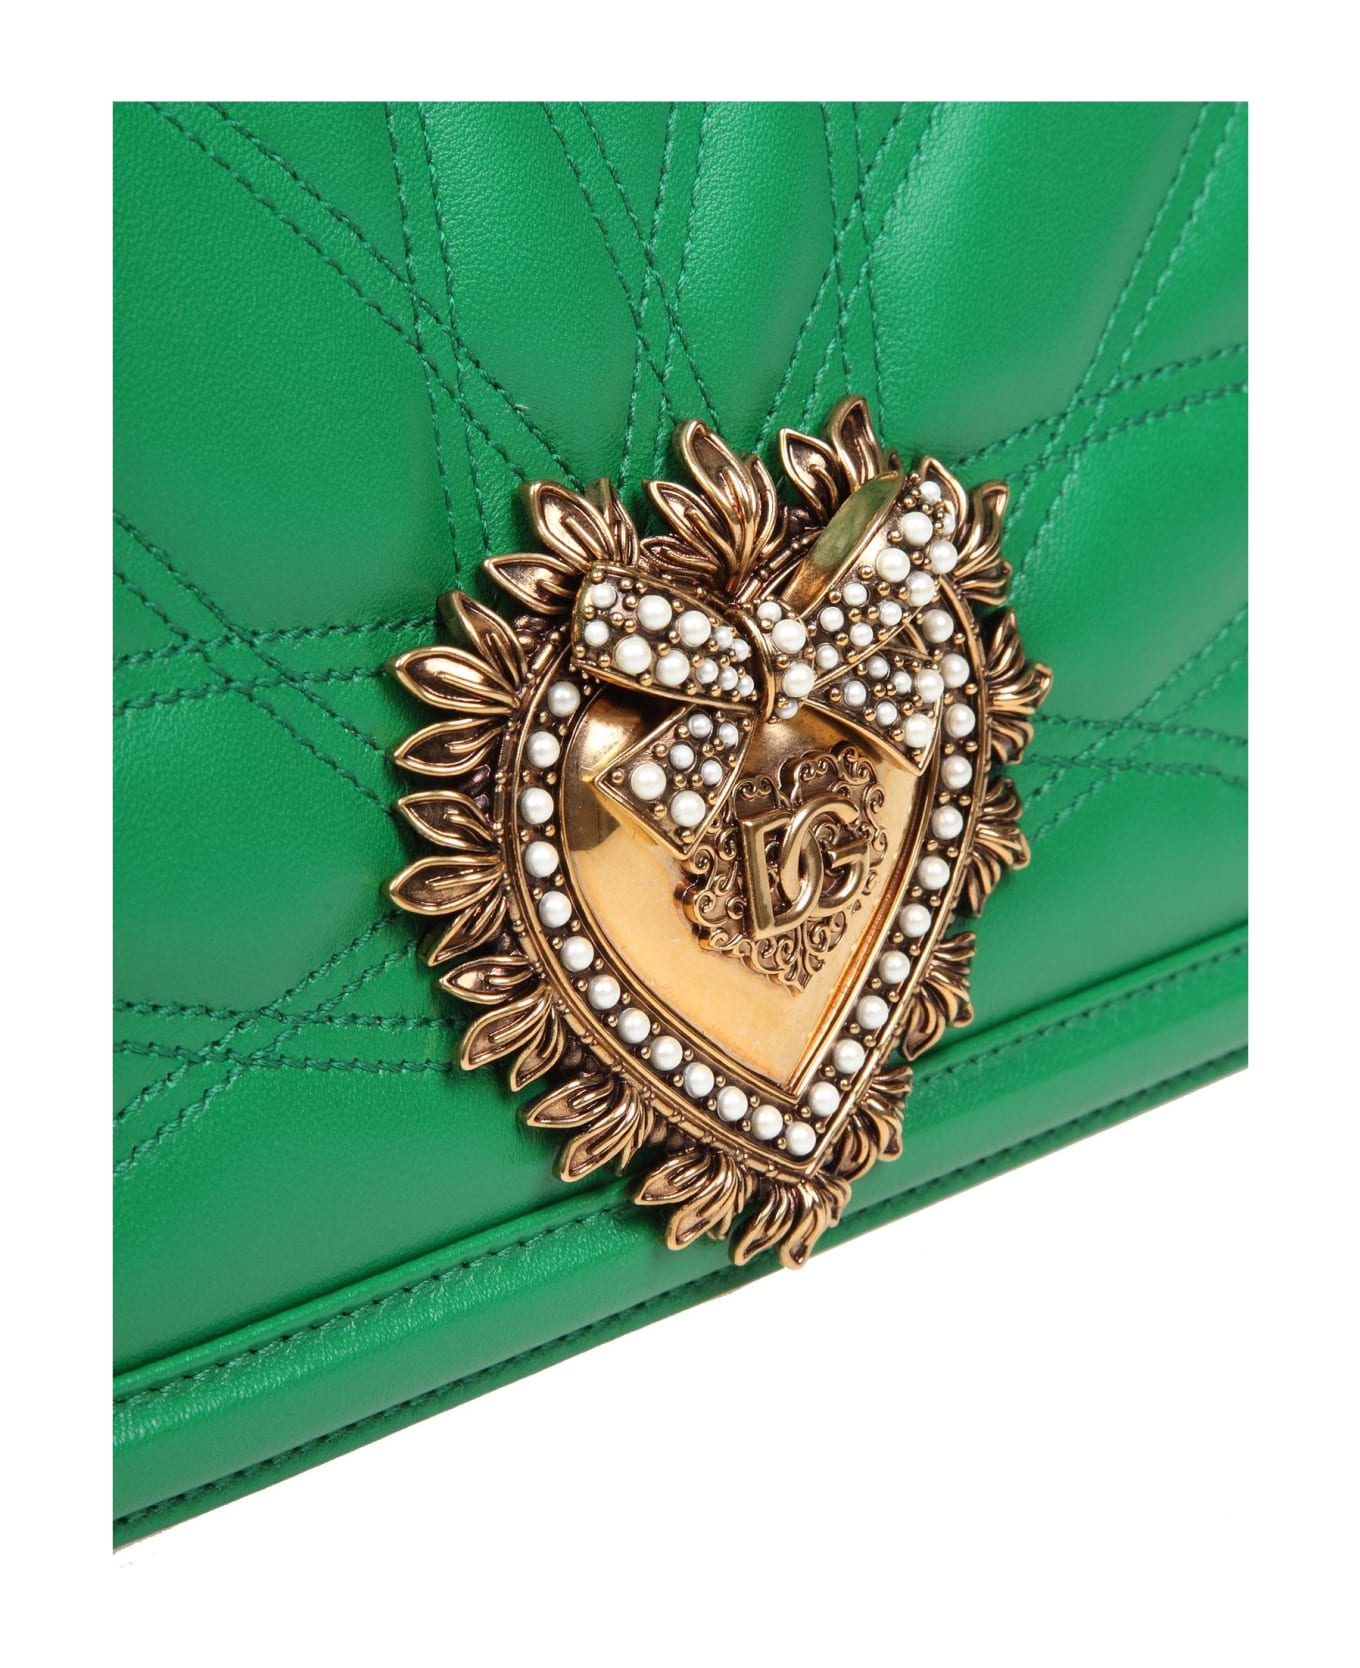 Dolce & Gabbana Devotion Bag - Green ショルダーバッグ